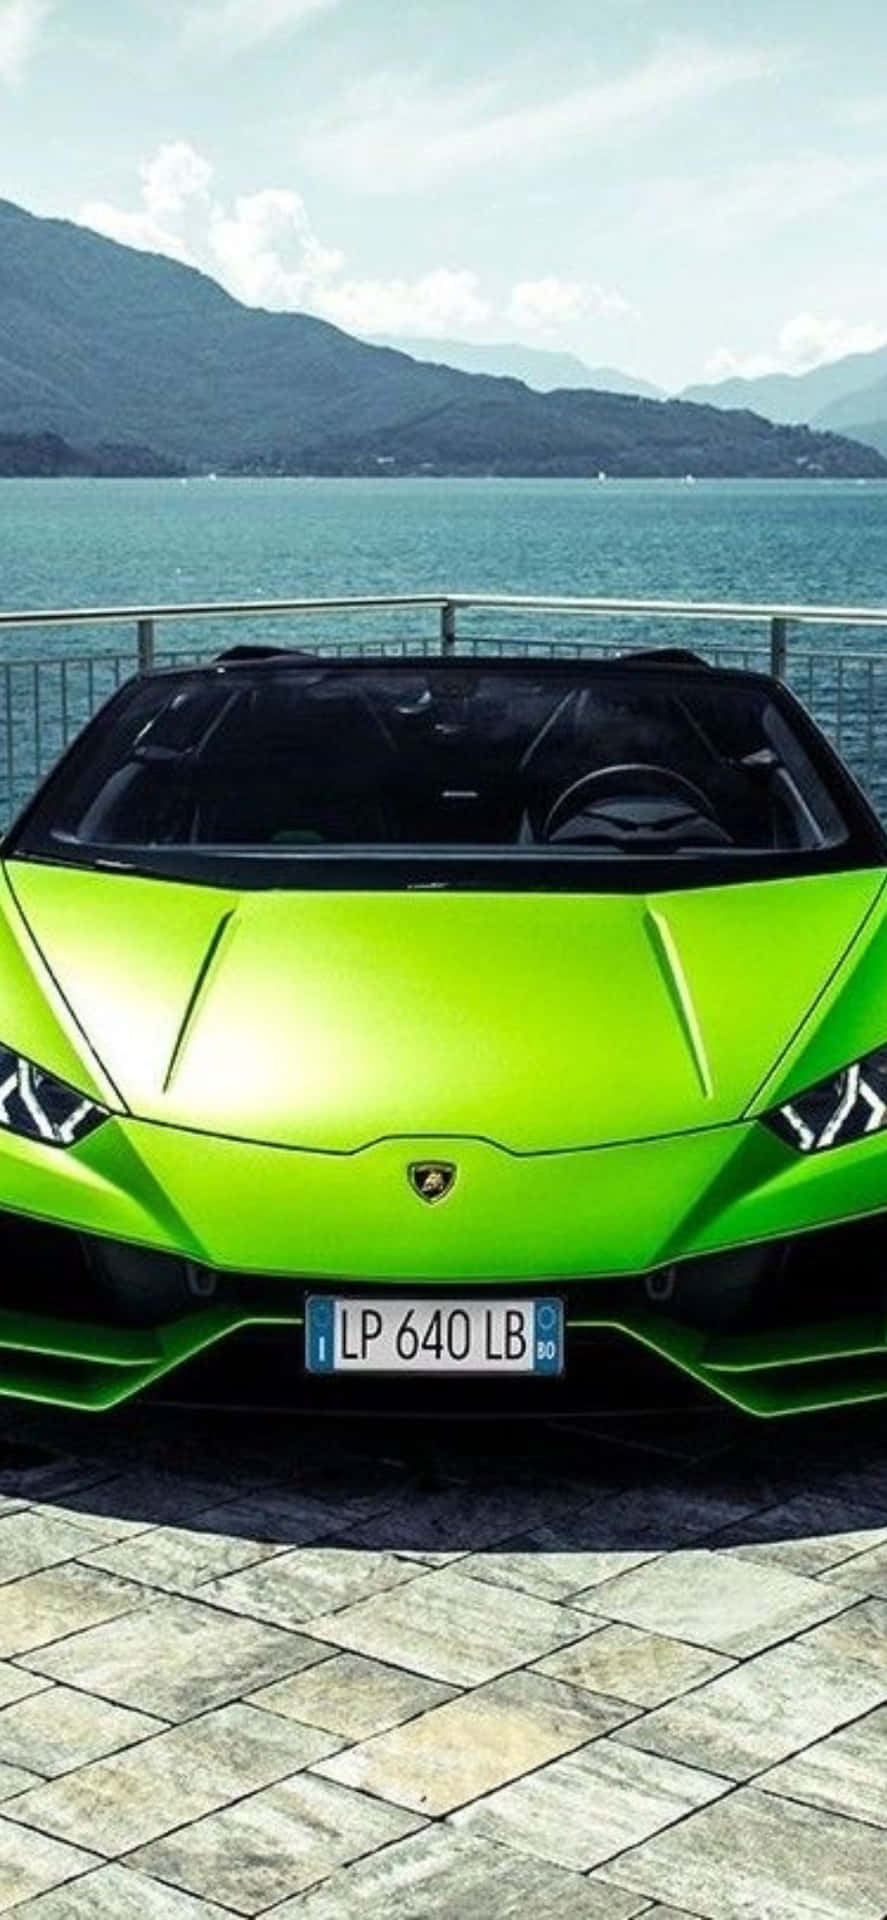 Iphonexs Max Lamborghini Apple Green Bakgrund